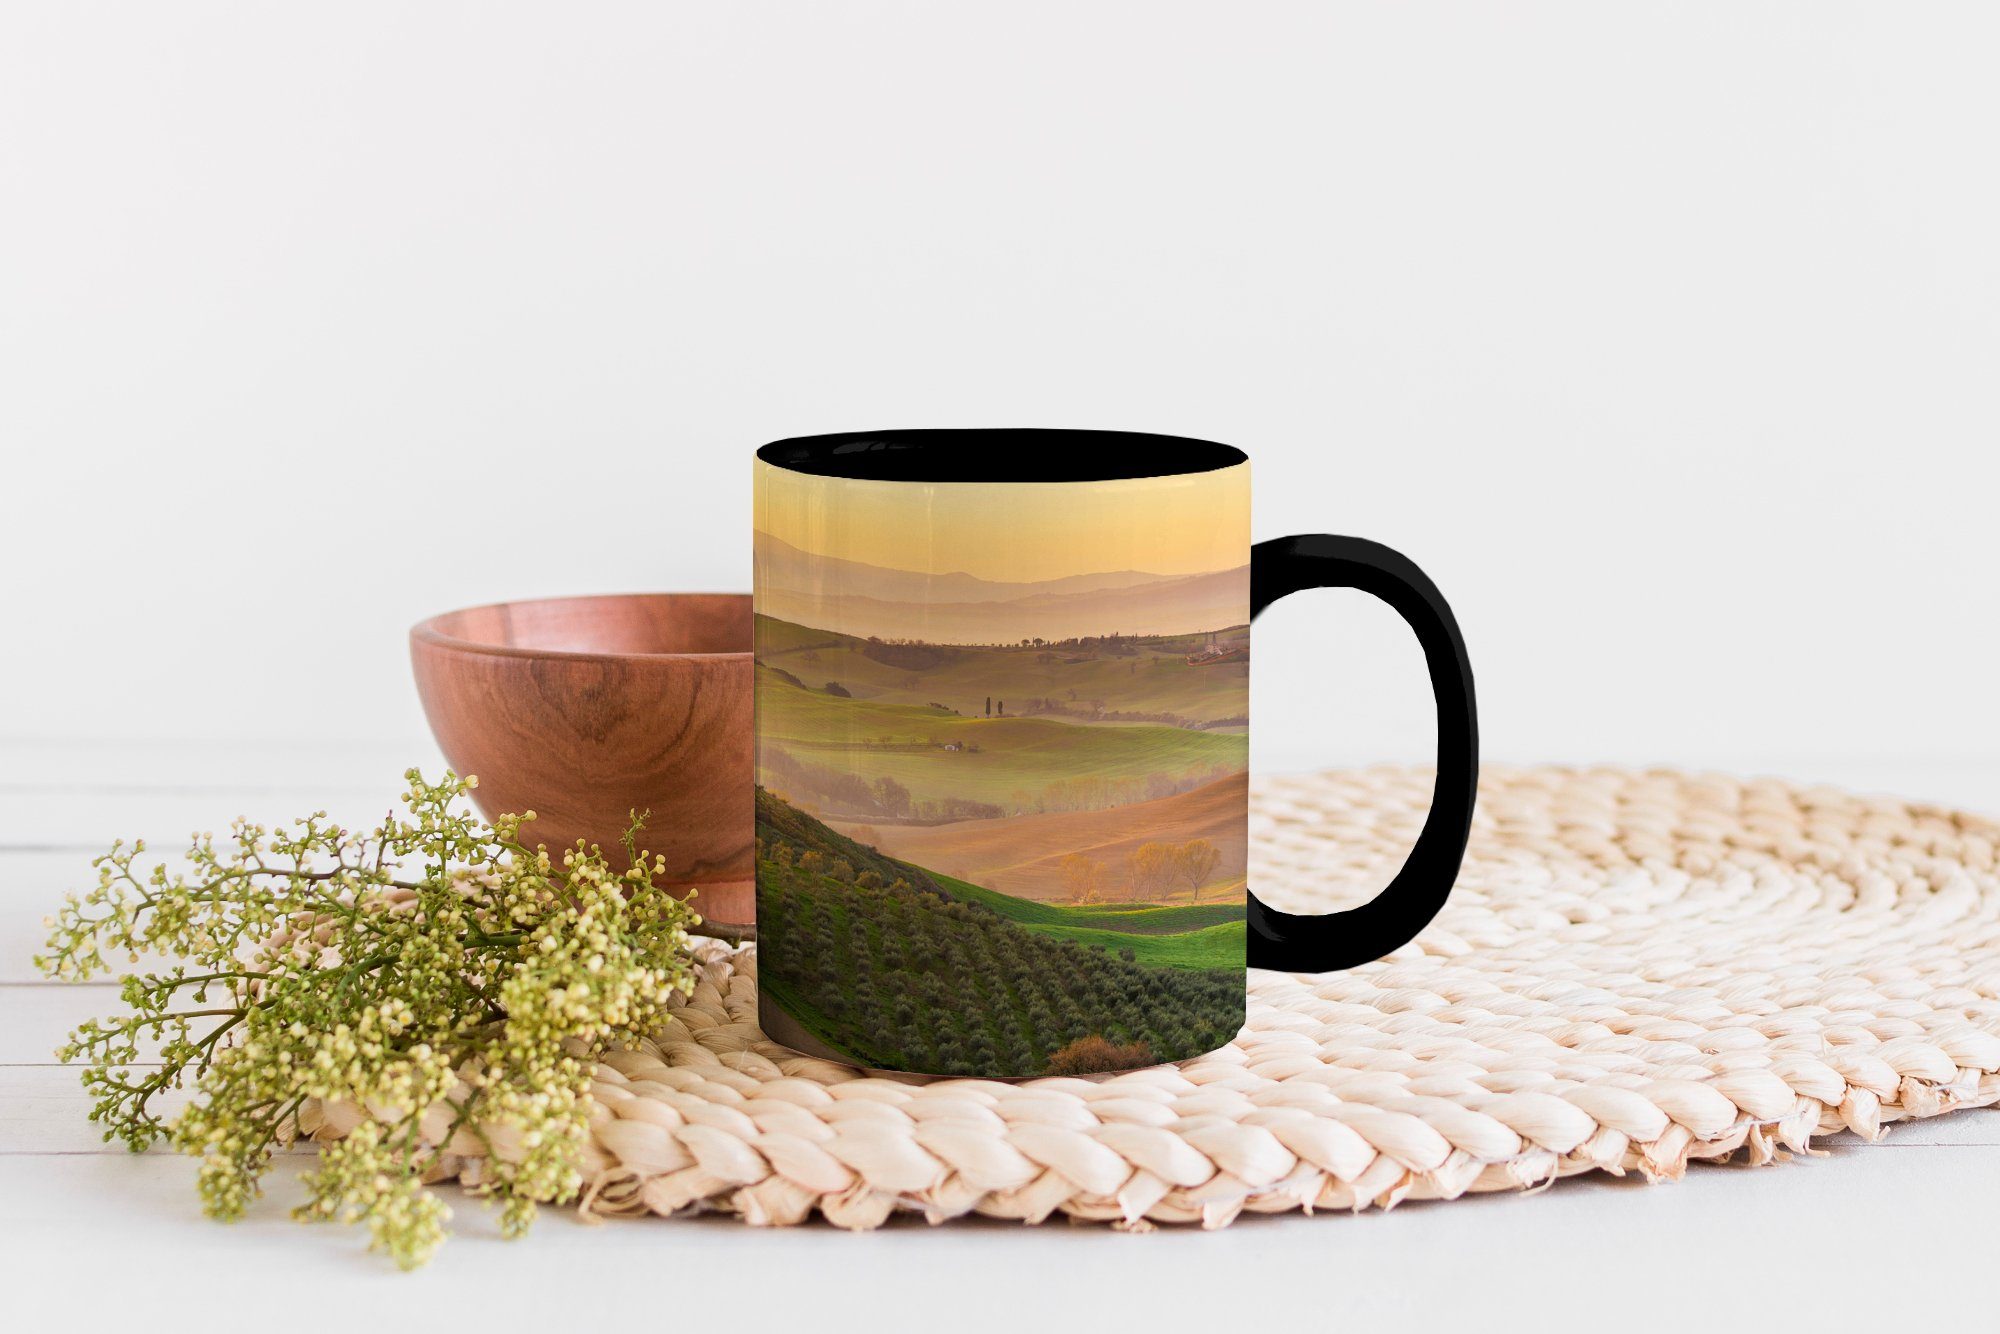 MuchoWow Farbwechsel, Geschenk Tasse Keramik, - Kaffeetassen, Hügel Teetasse, Zaubertasse, Toskana - Landschaft,